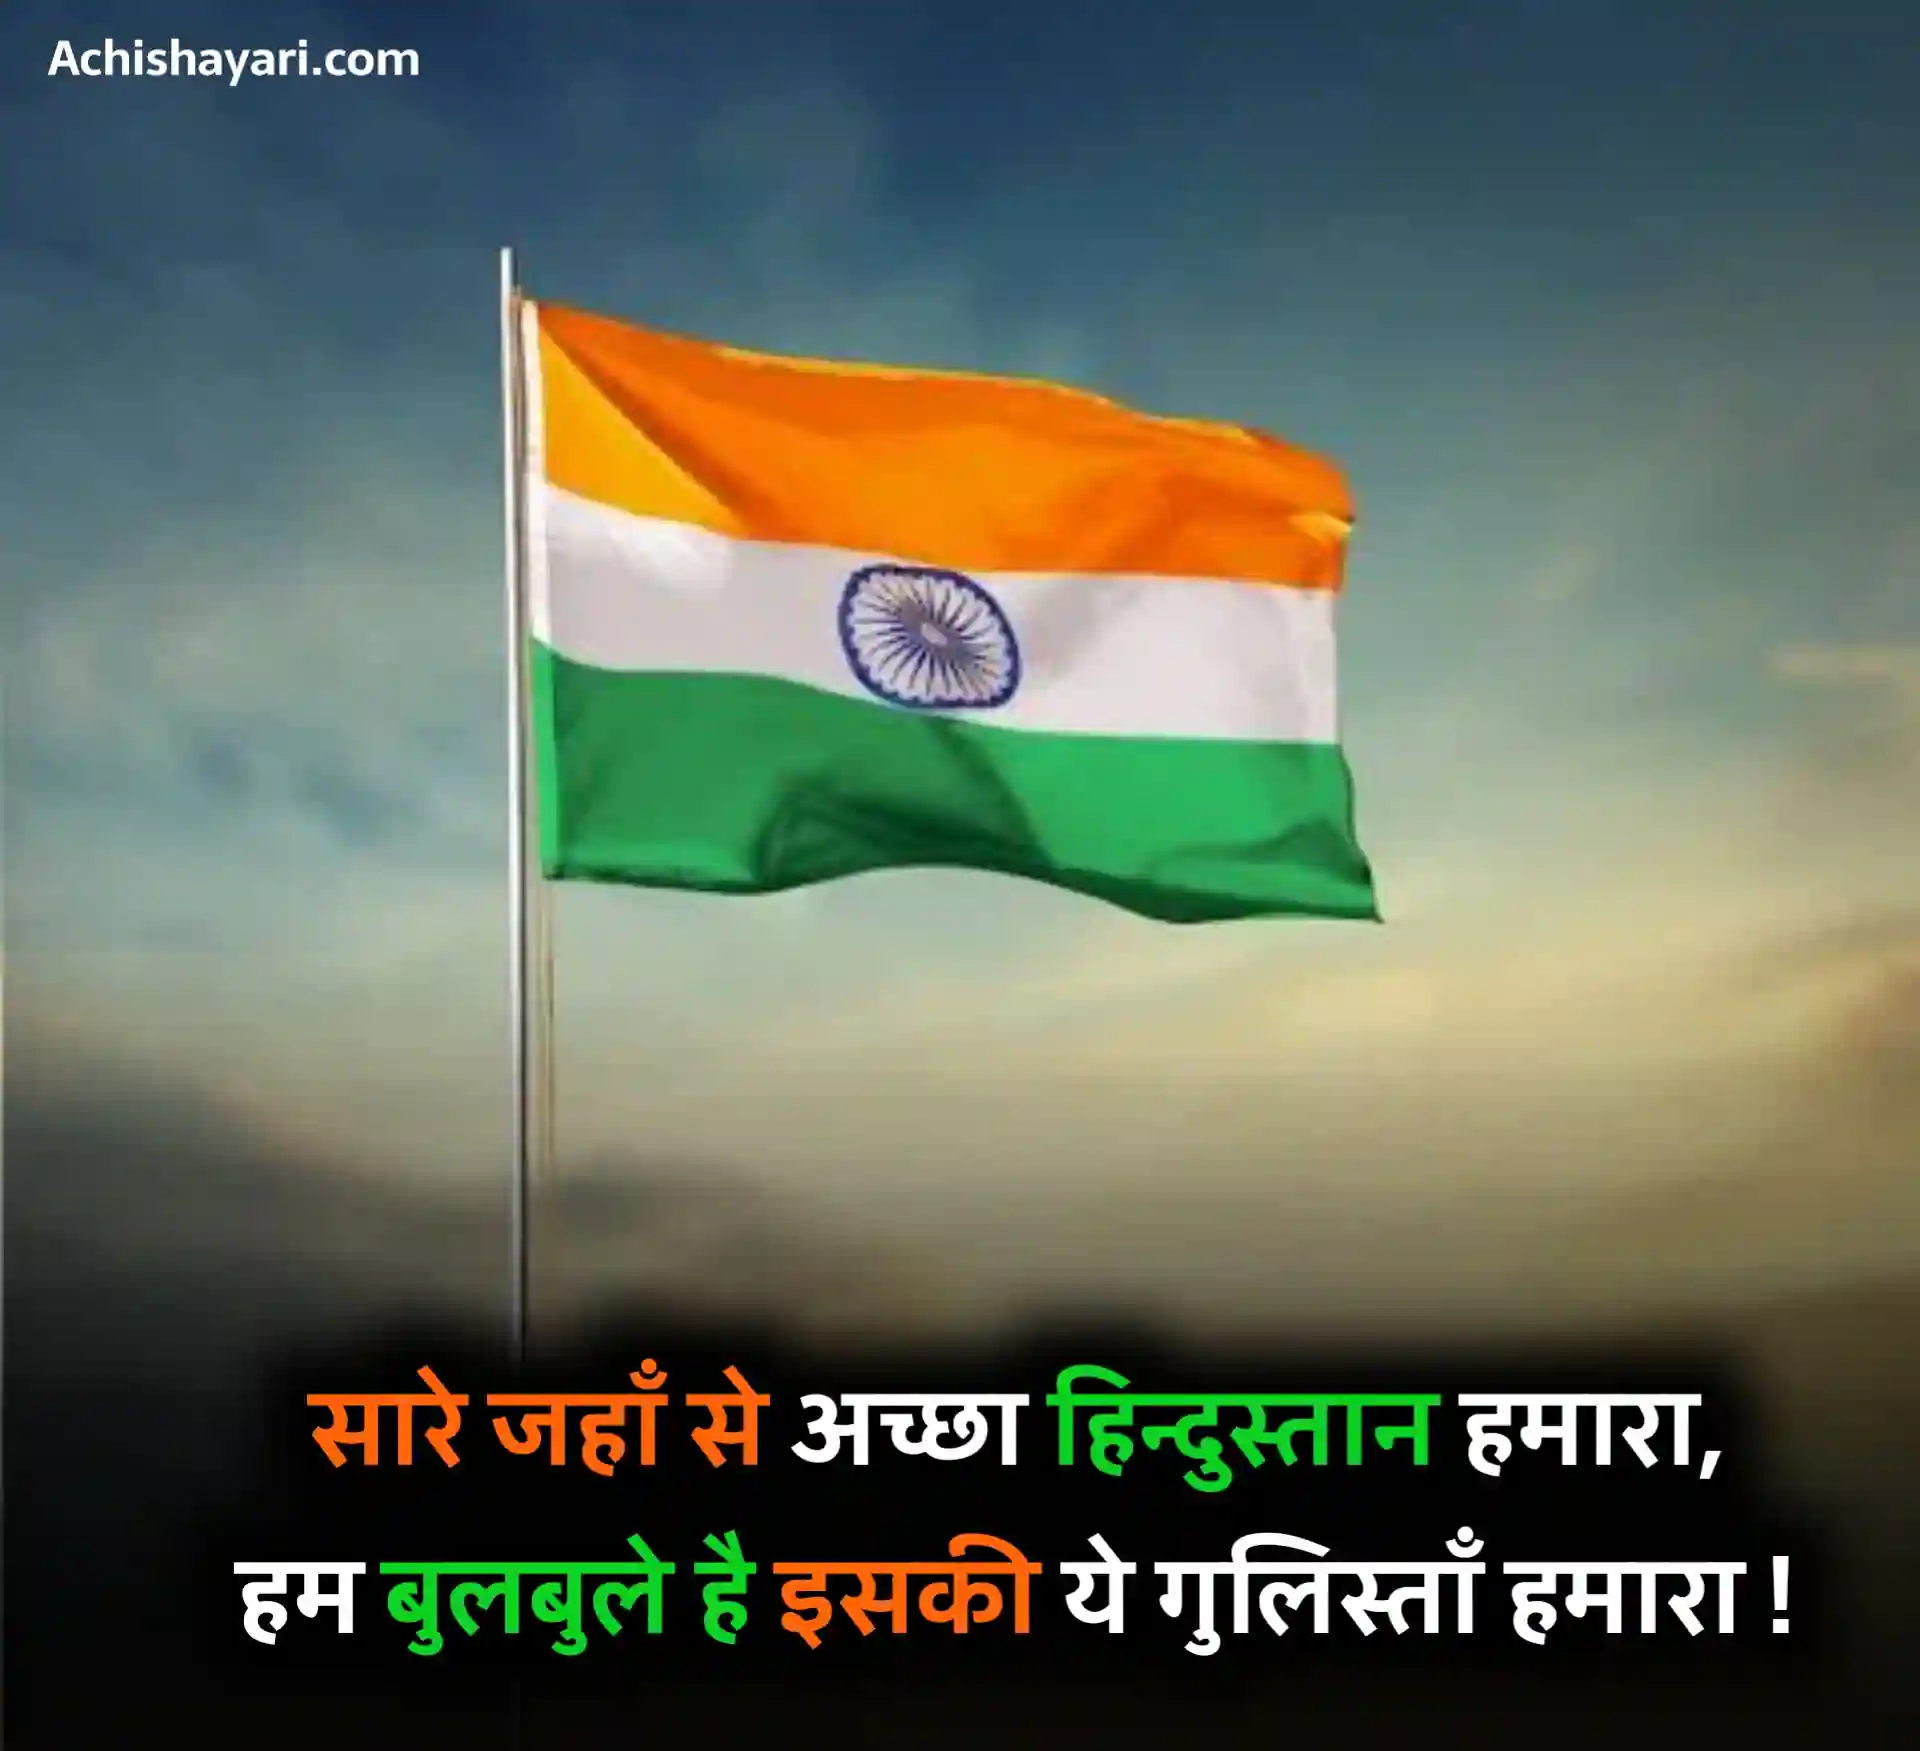 Indian Army Status in Hindi Image